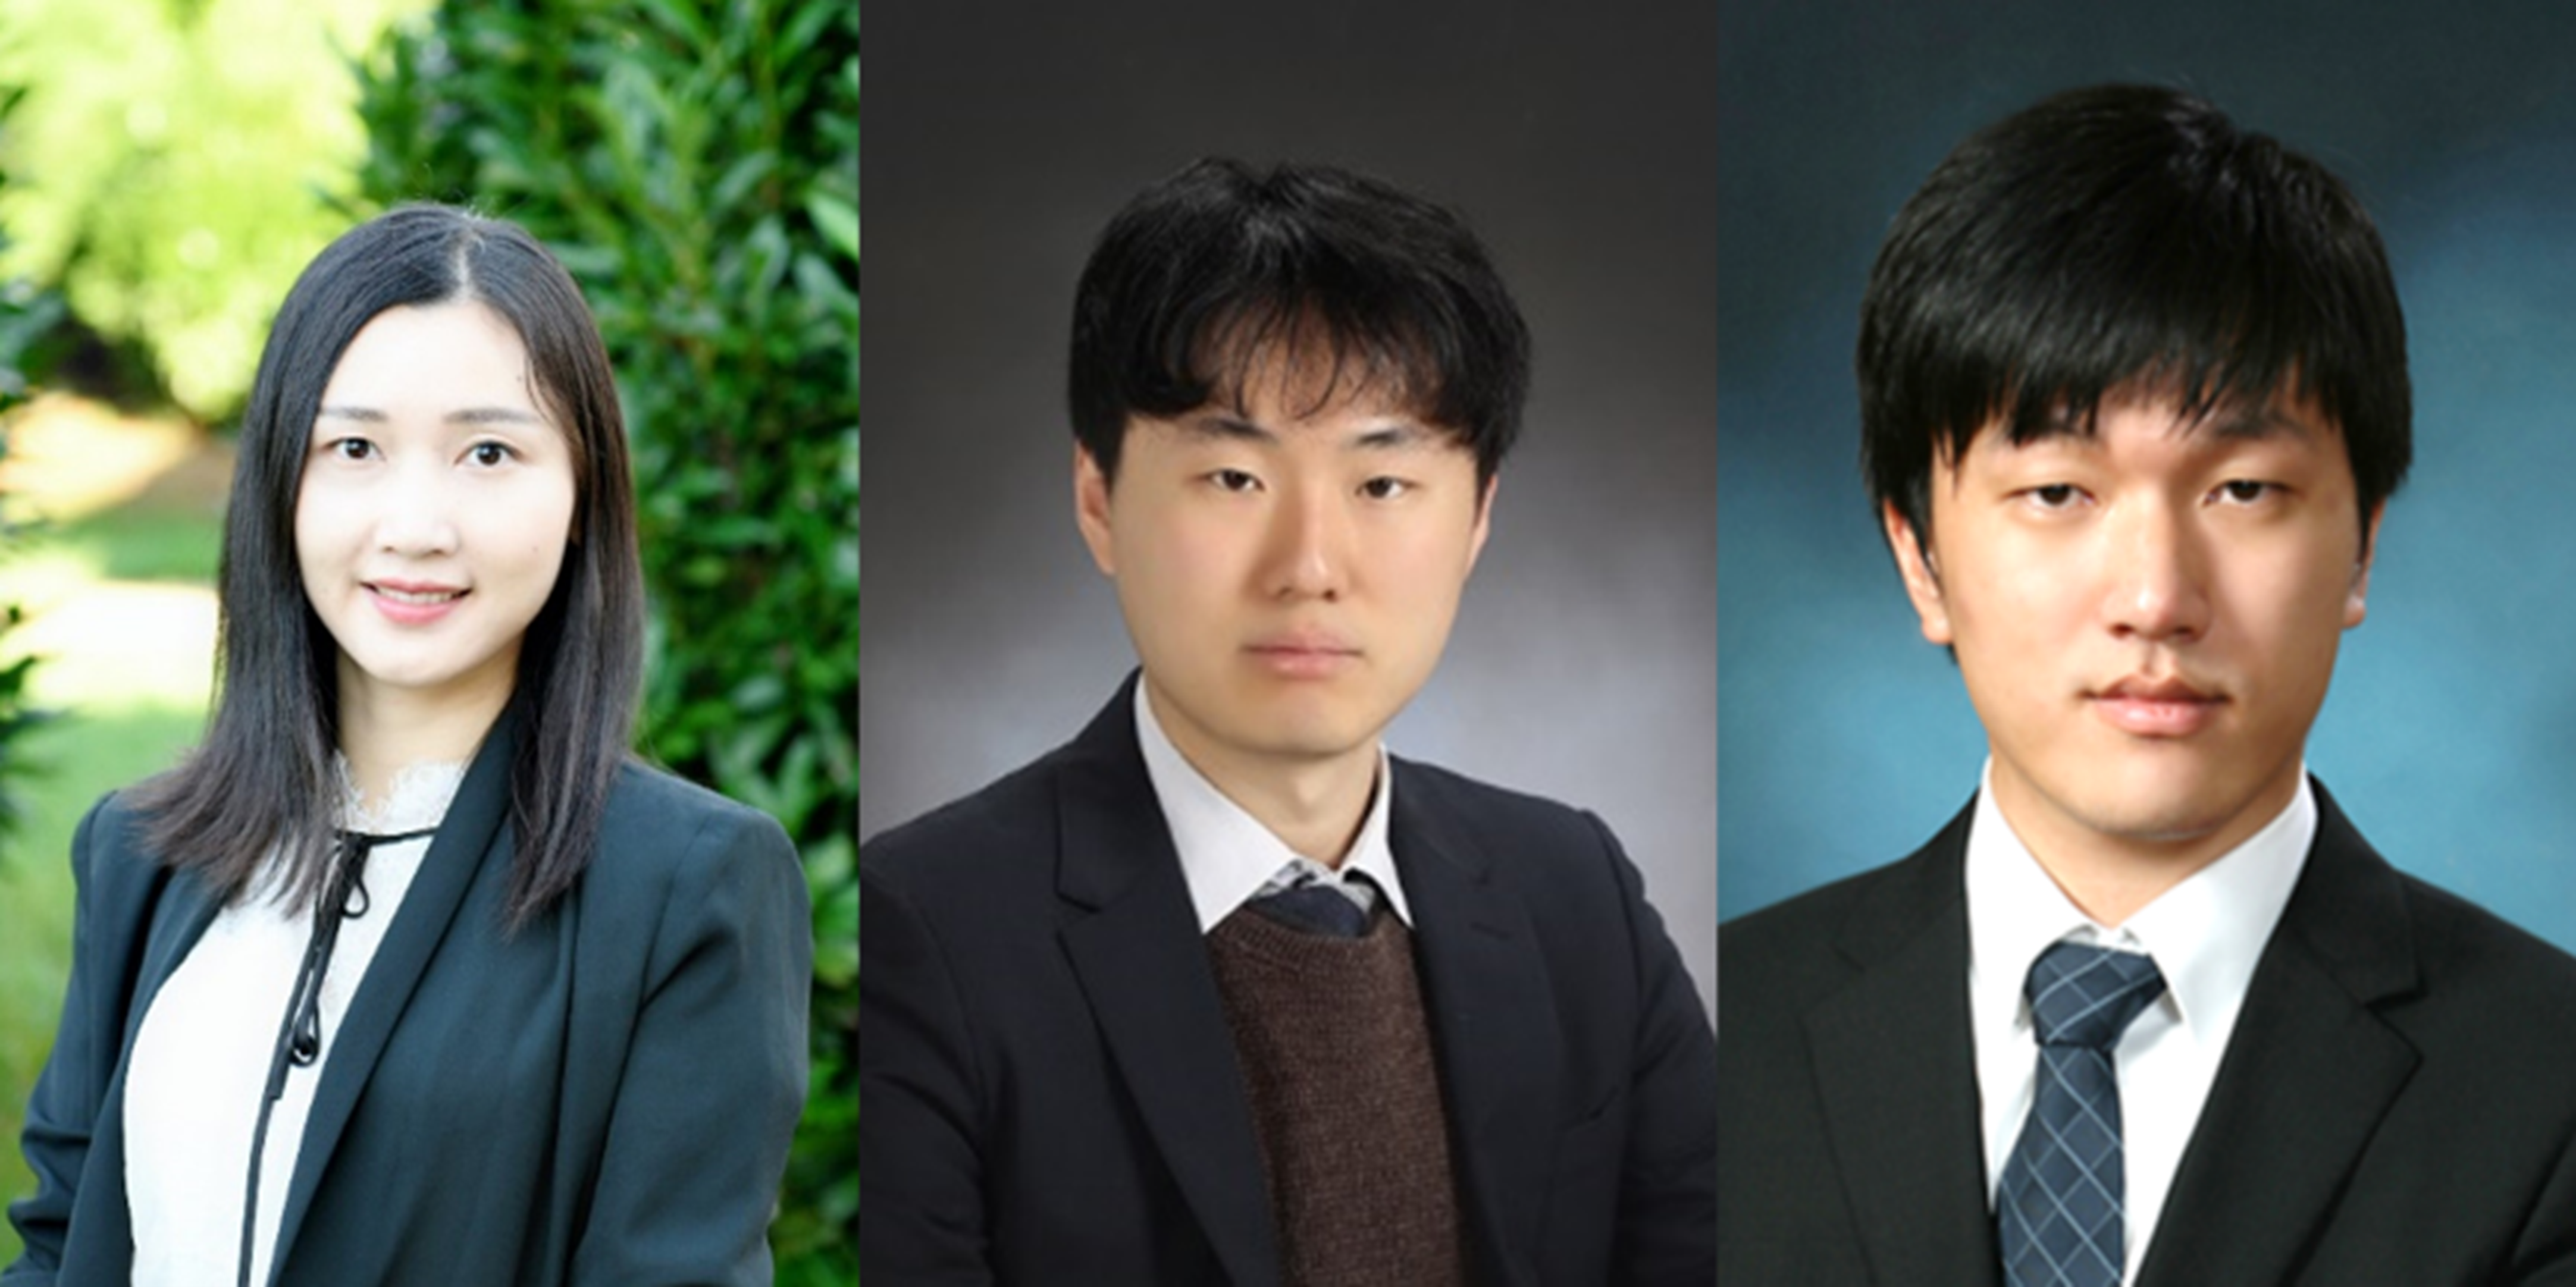 Dr Huiyuan Zhu, Dr Sukjoon Hong and Dr Joonmyung Choi.